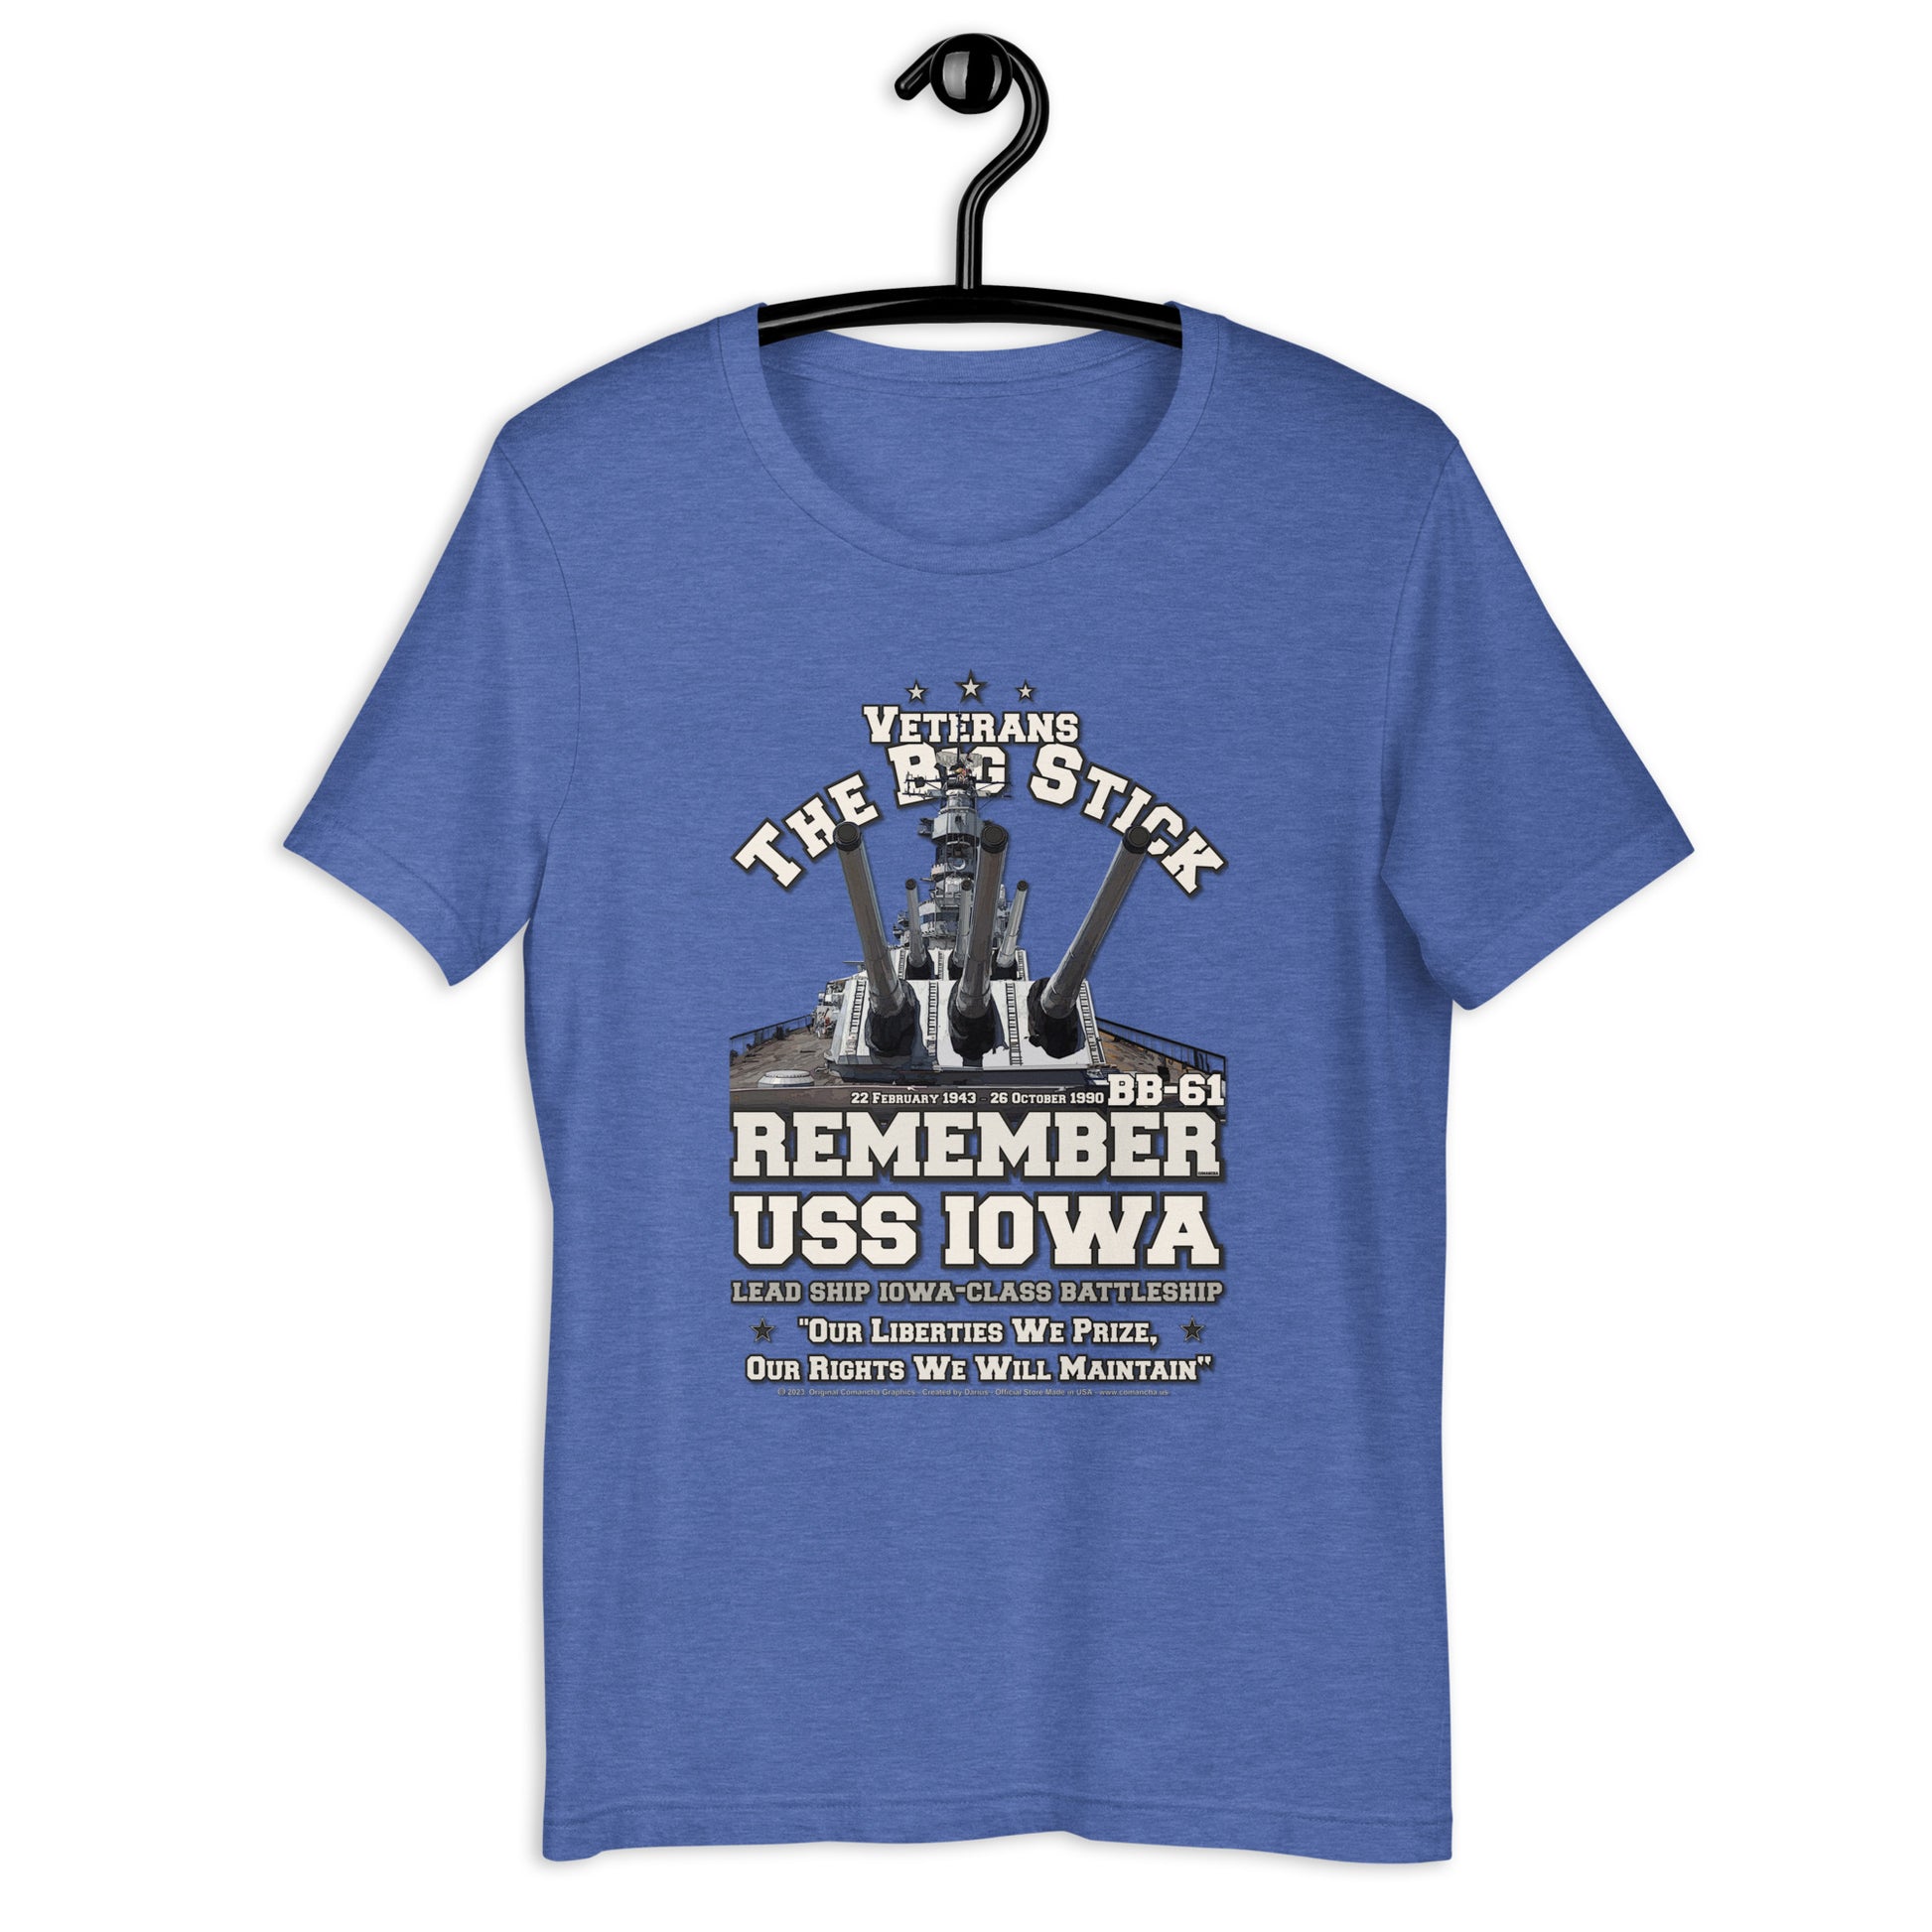 USS IOWA T-Shirt, USS IOWA BB-61 t-shirt, Battleship Veterans T-Shirt, US NAVY SHIPS Tees, US NAVY Veterans T-Shirt, USS IOWA BB-61 Battleship Veterans Classic T-Shirt, Comancha T-Shirt,